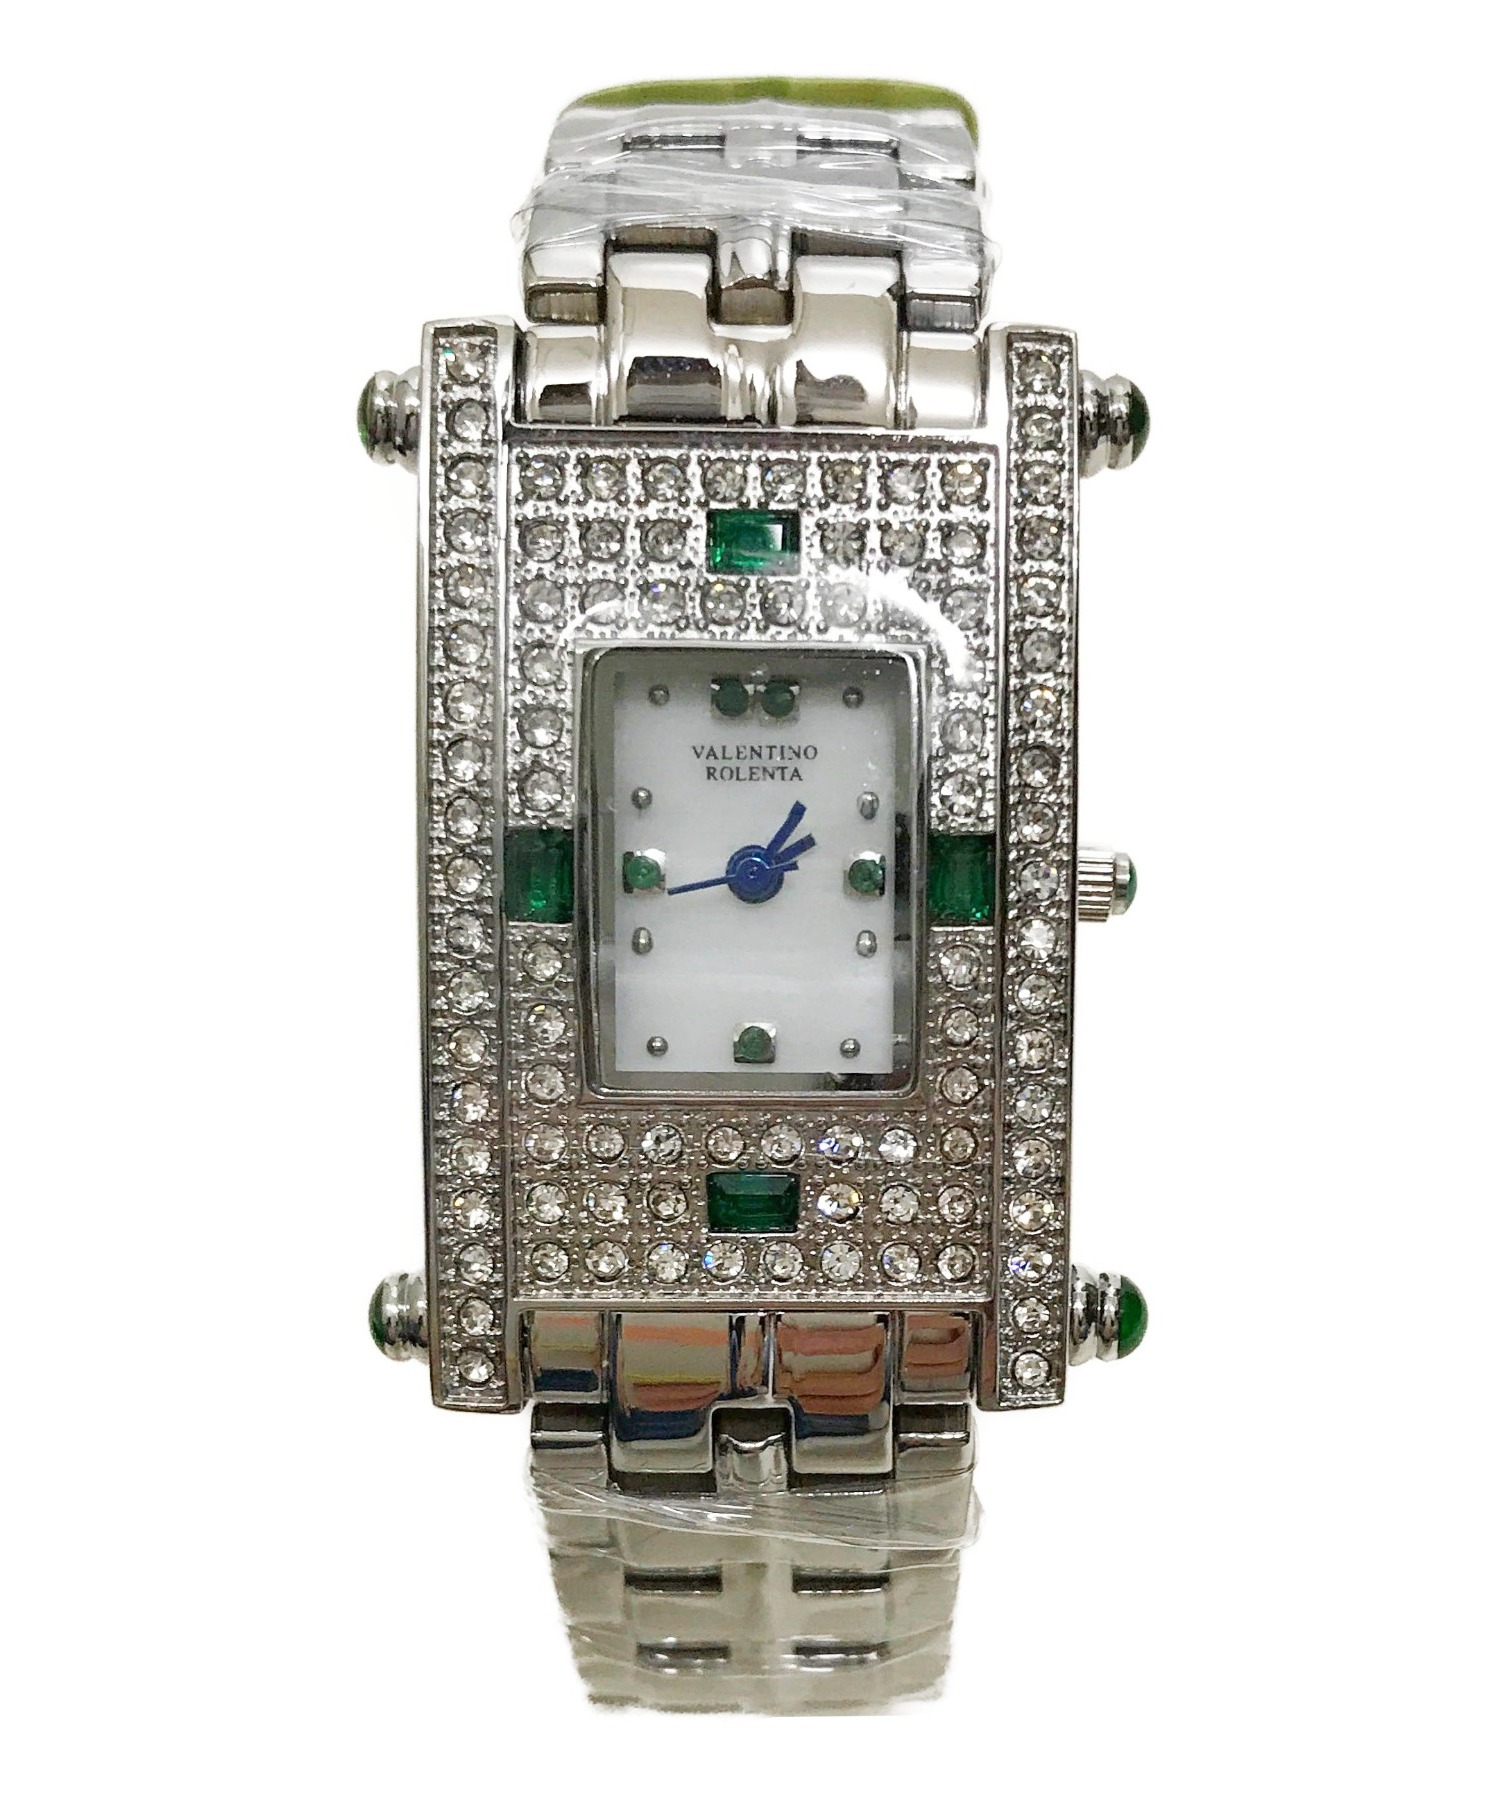 VALENTINO ROLENTA 腕時計 | tradexautomotive.com